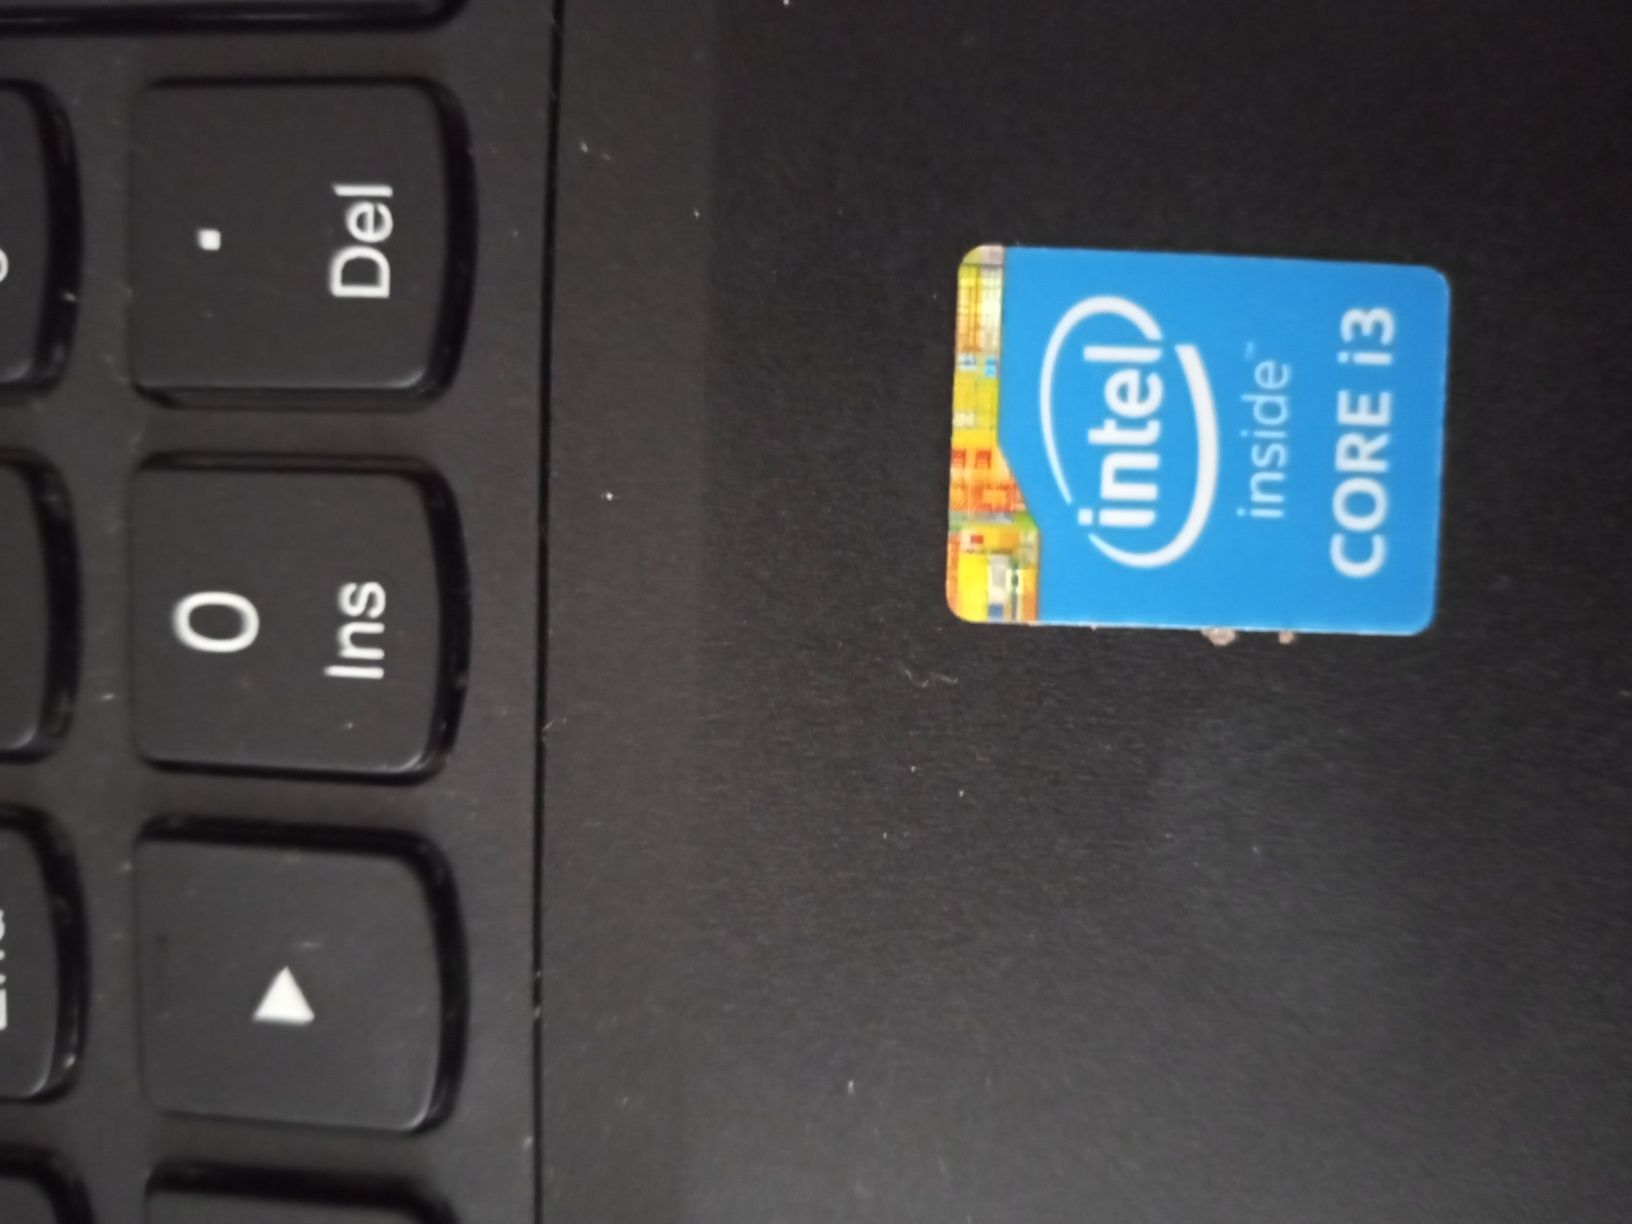 Laptop Lenovo Intel Core I3